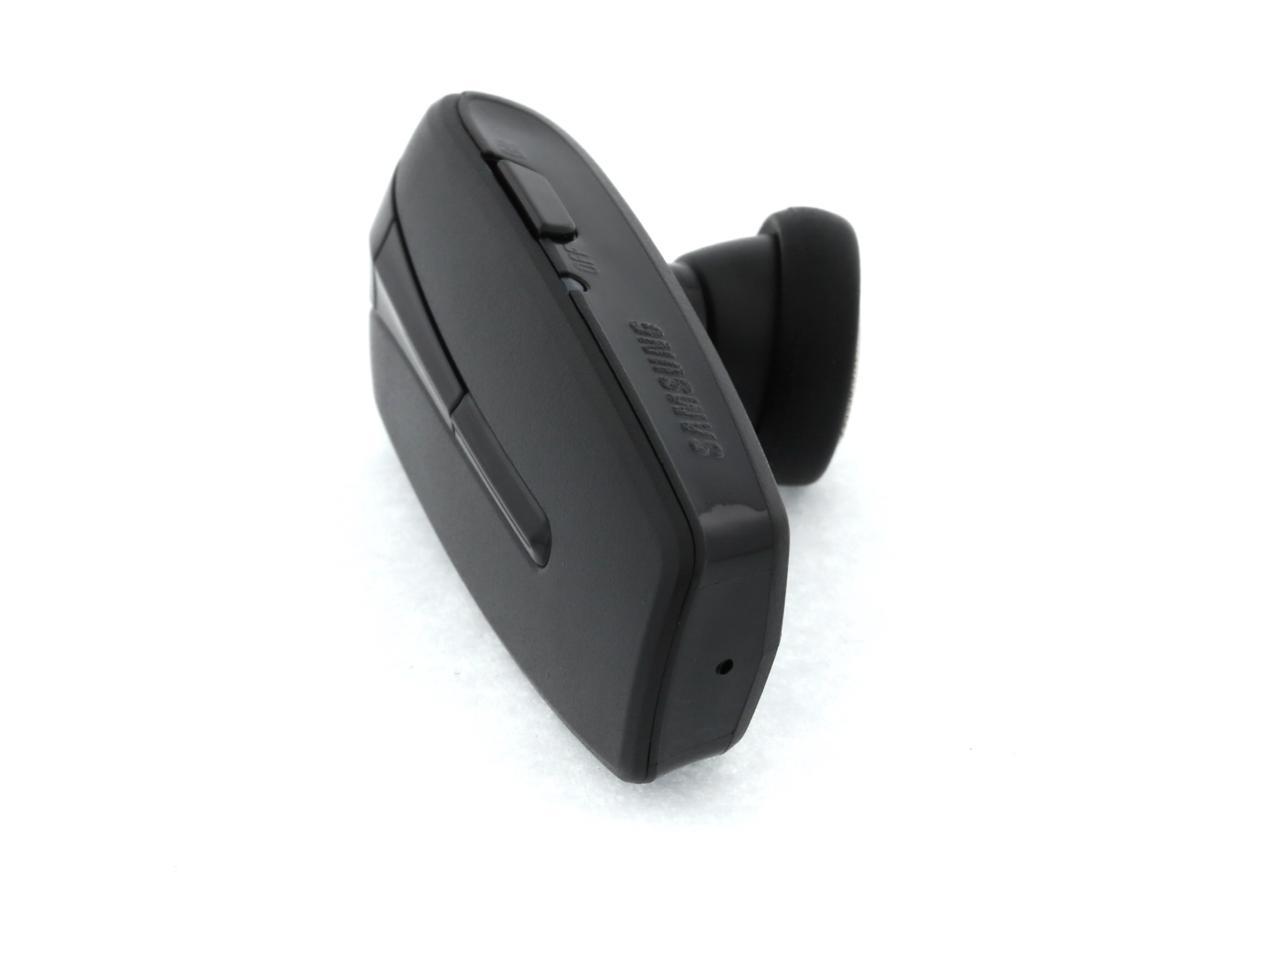 tragedie Versterken grond Samsung (BHM1350NFCACSTA) Black HM1350 Bluetooth Headset - Newegg.com